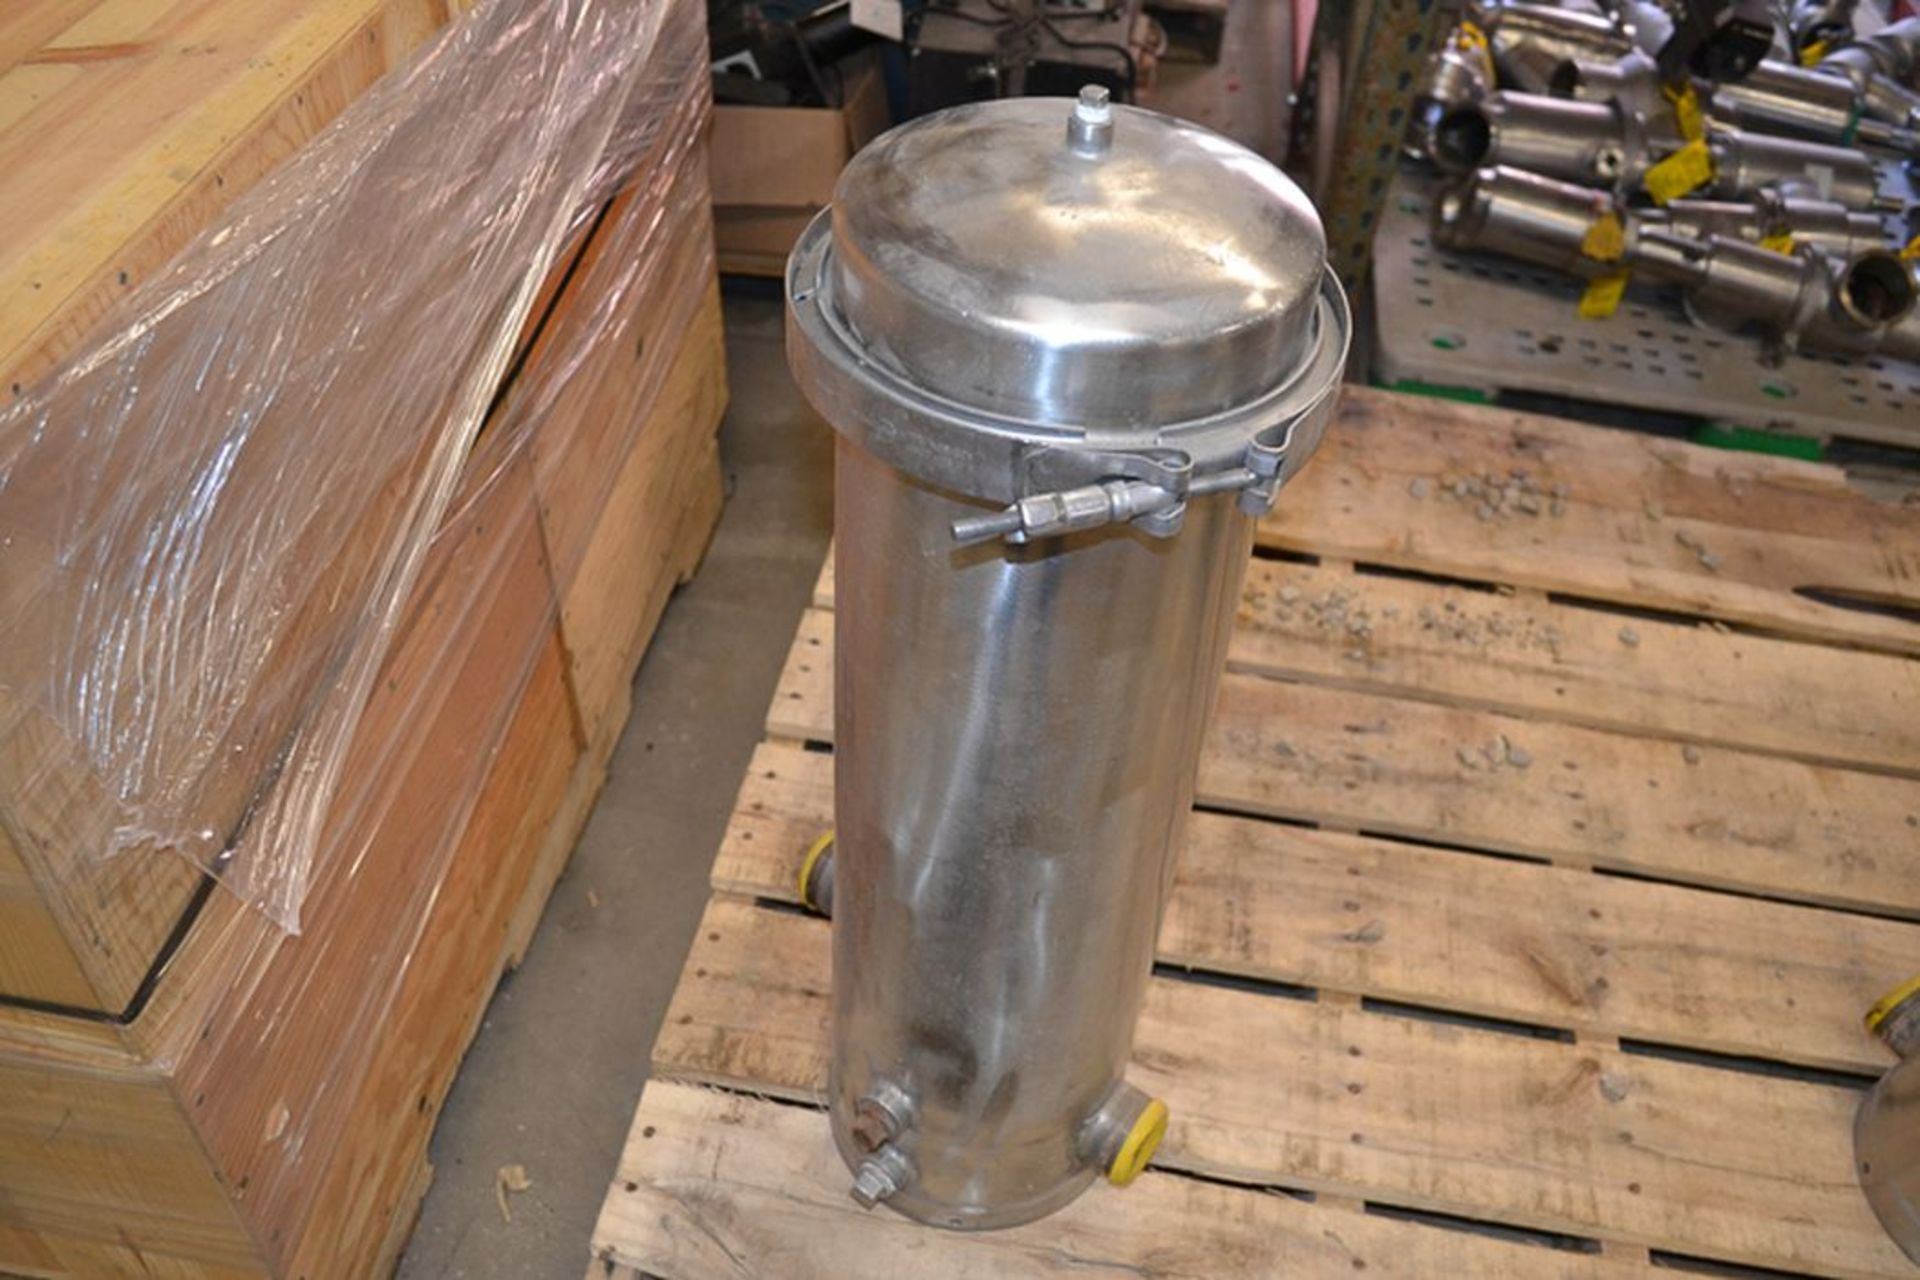 S/S Vertical Water Filter Tanks with Internal S/S Filter Rack, 8" Diameter x 20" Deep, 2" NPT